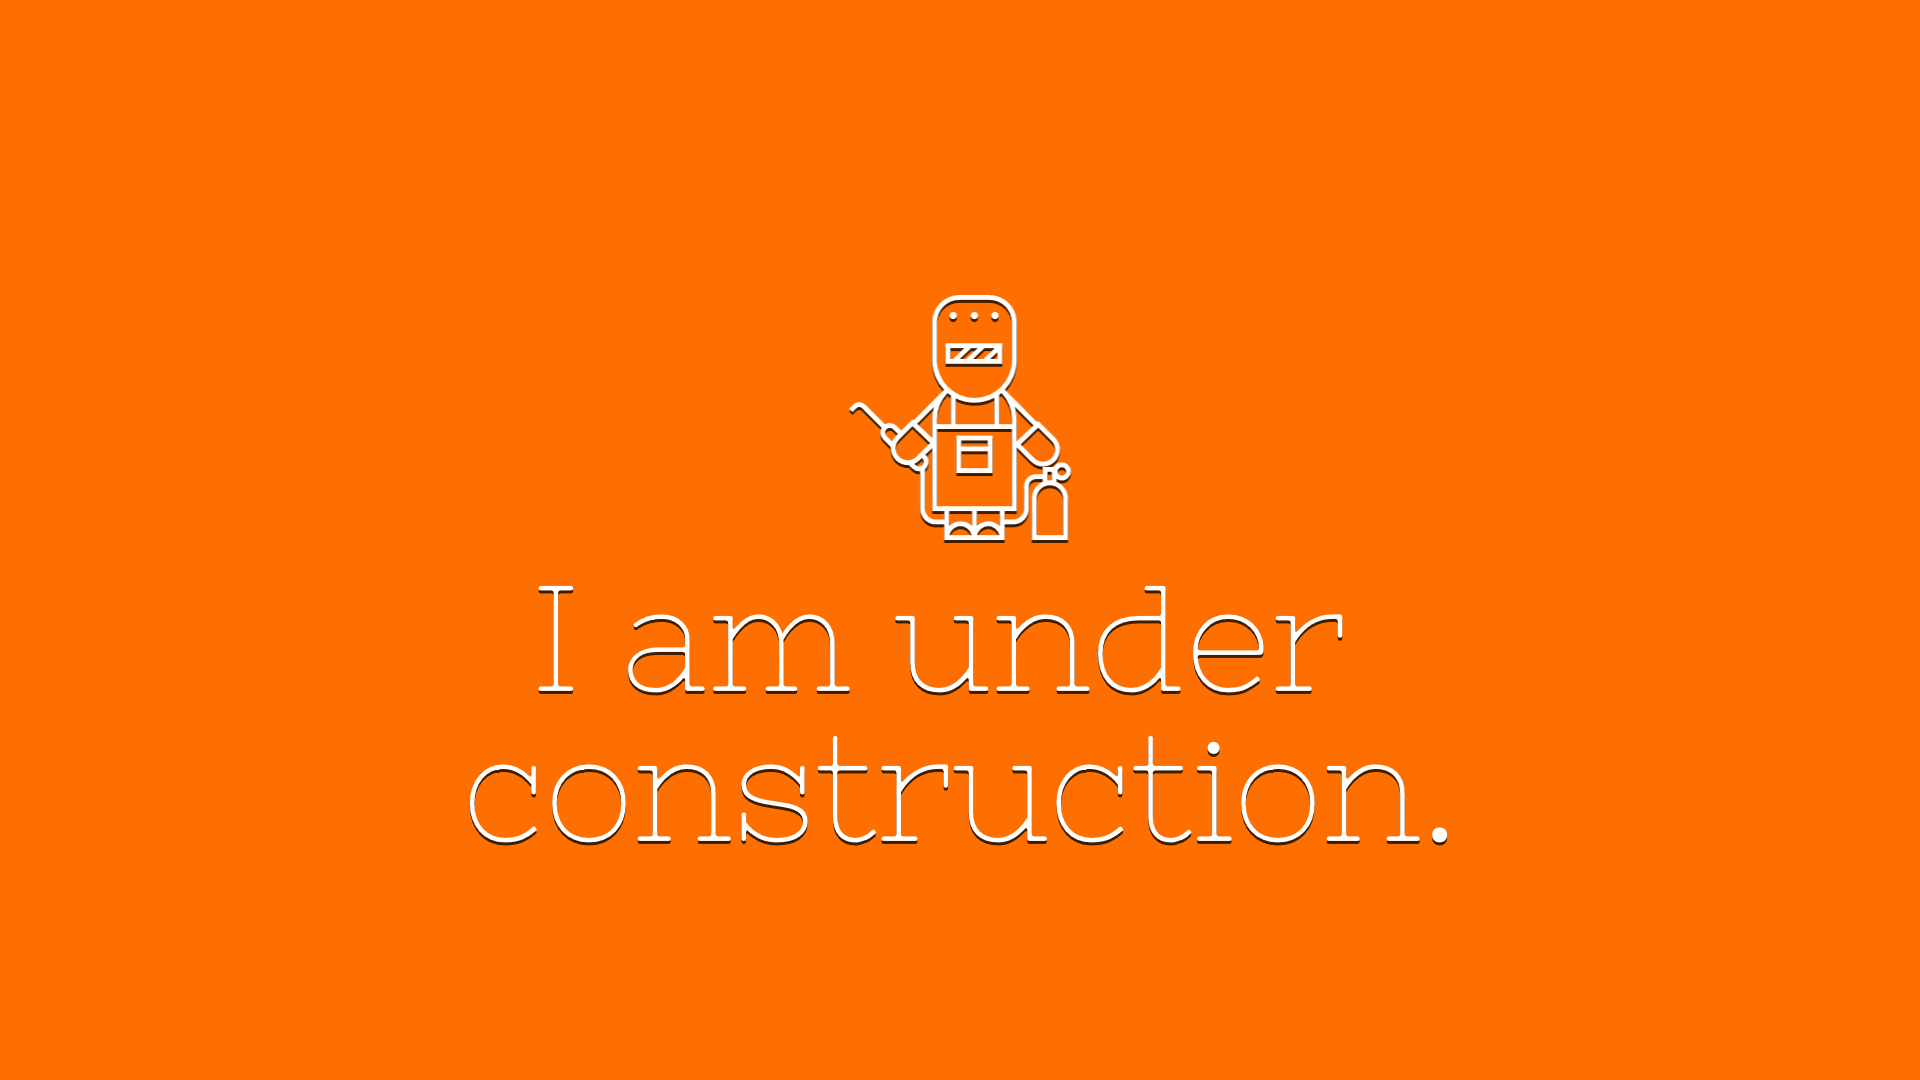 I am under construction template Design  Template 